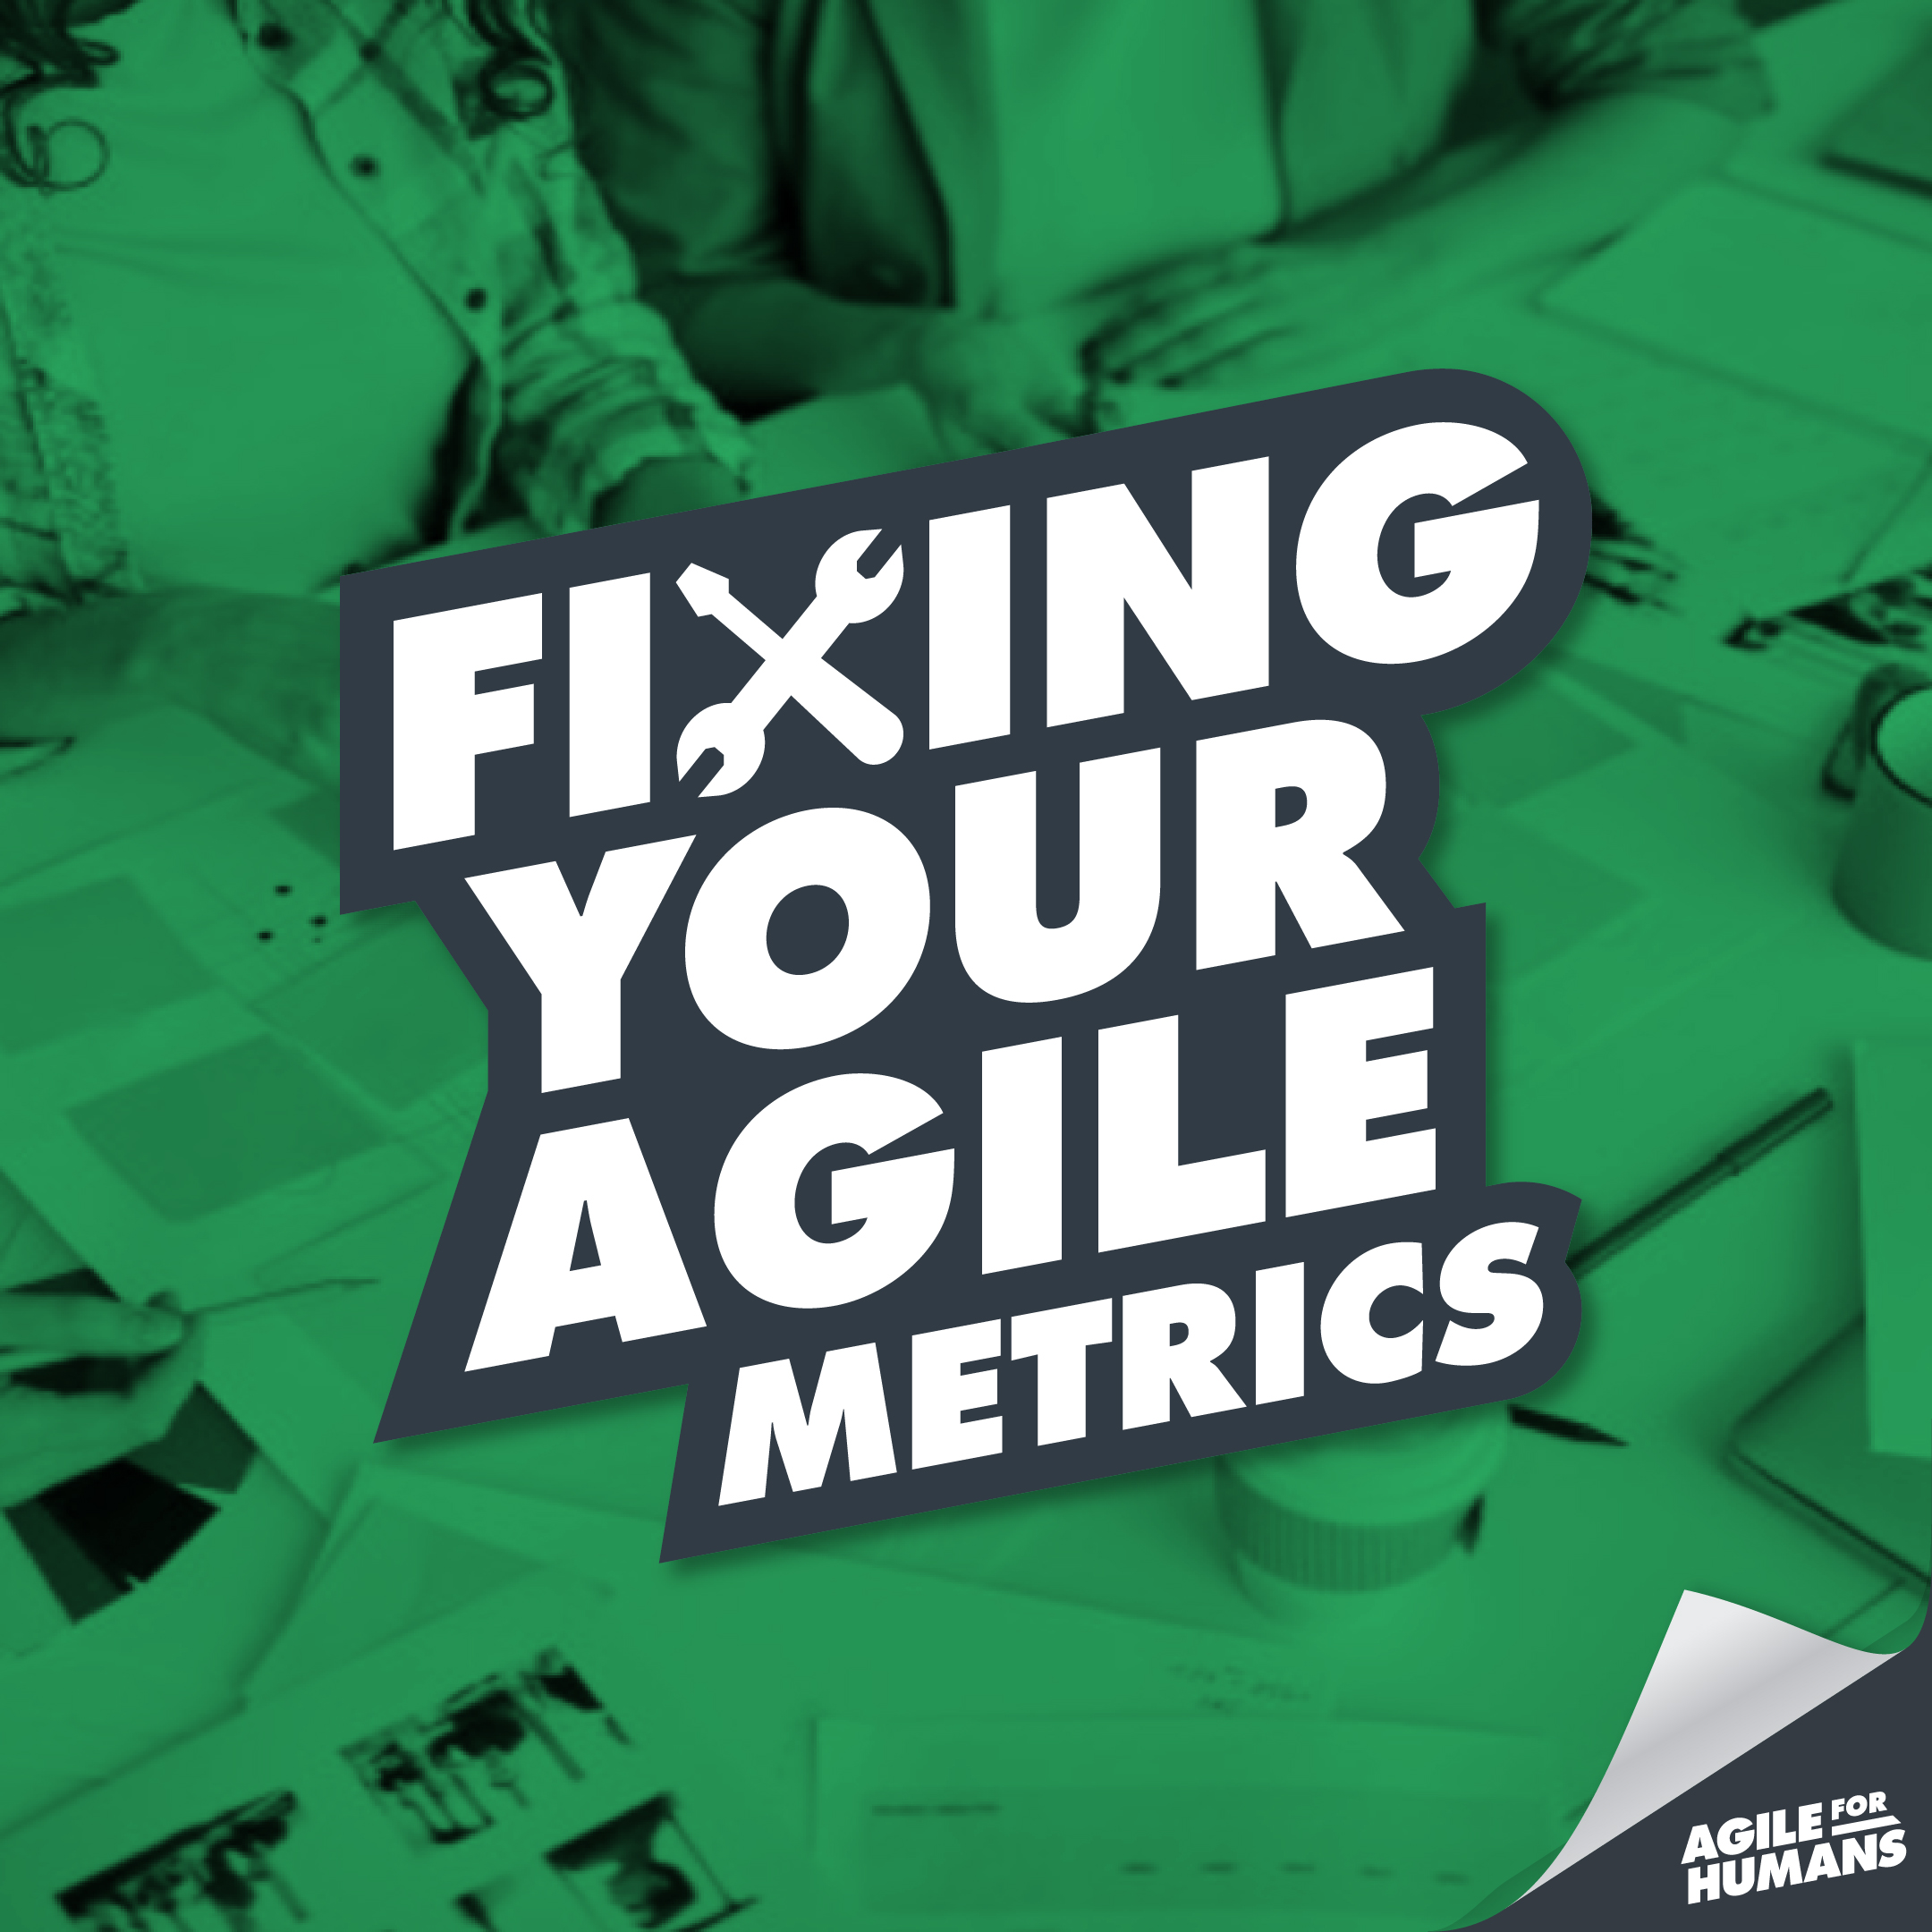 Agile Metrics: Your Metrics Have Gone Stale!